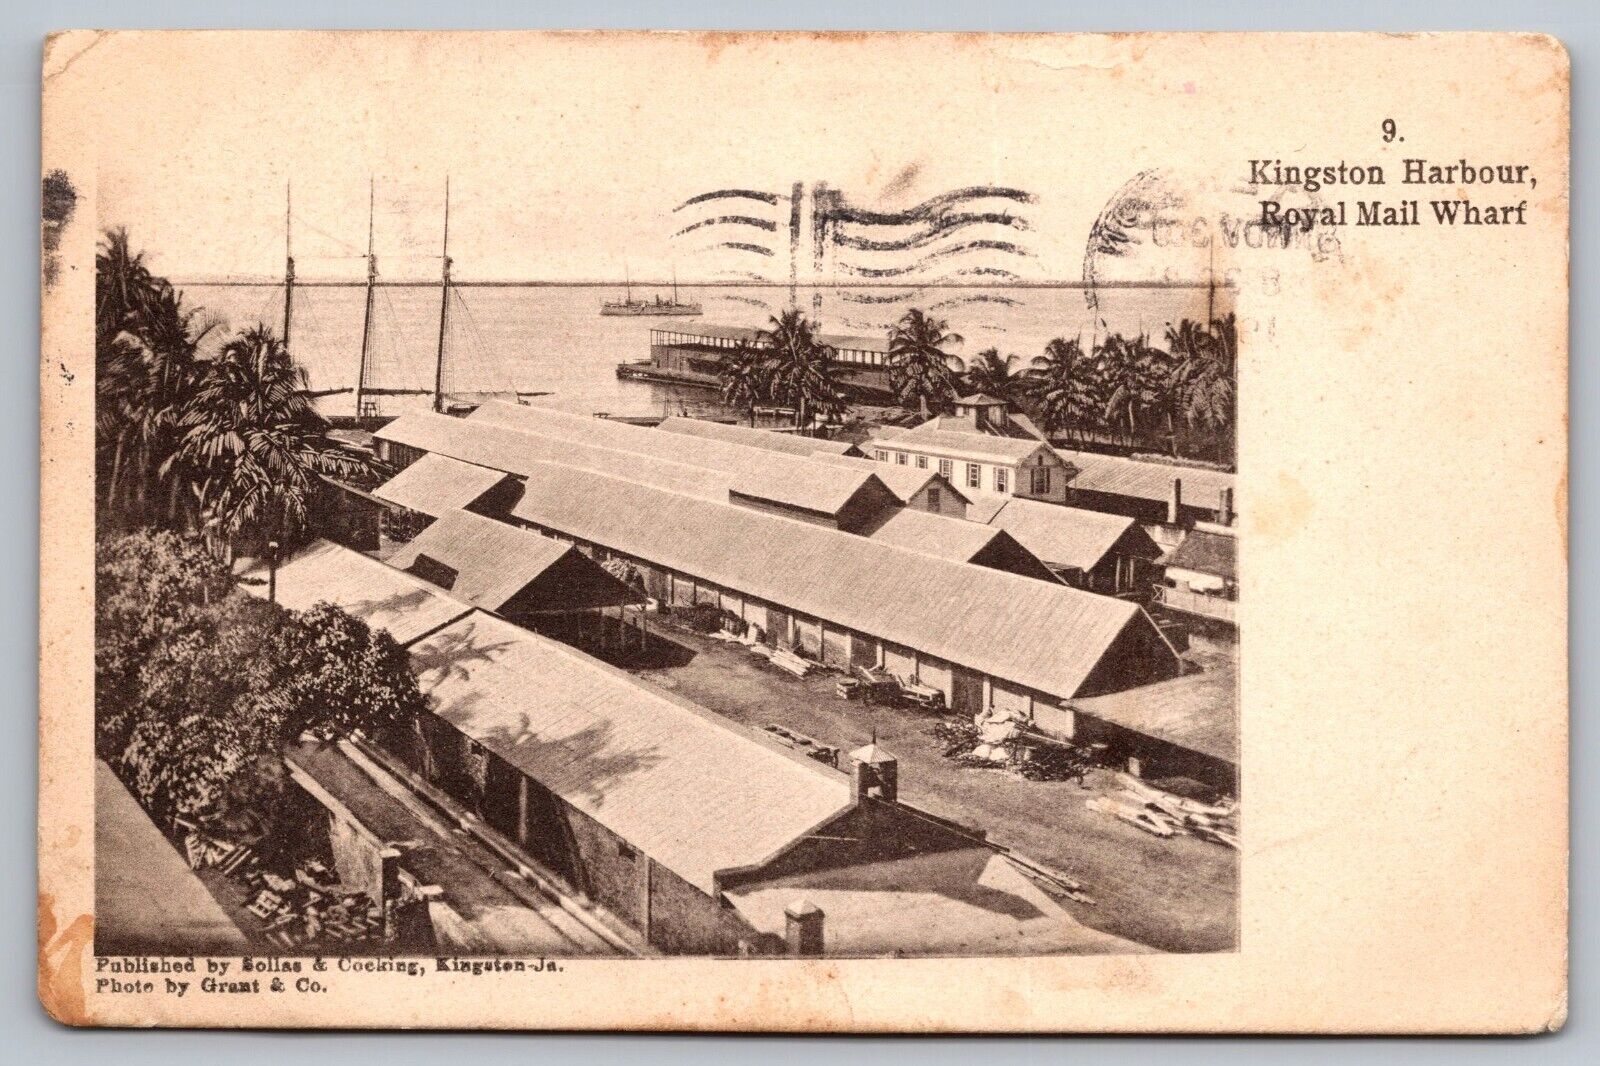 Kingston Harbour Royal Mail Wharf Jamaica-Antique Postcard c. 1906 (Very Rare)